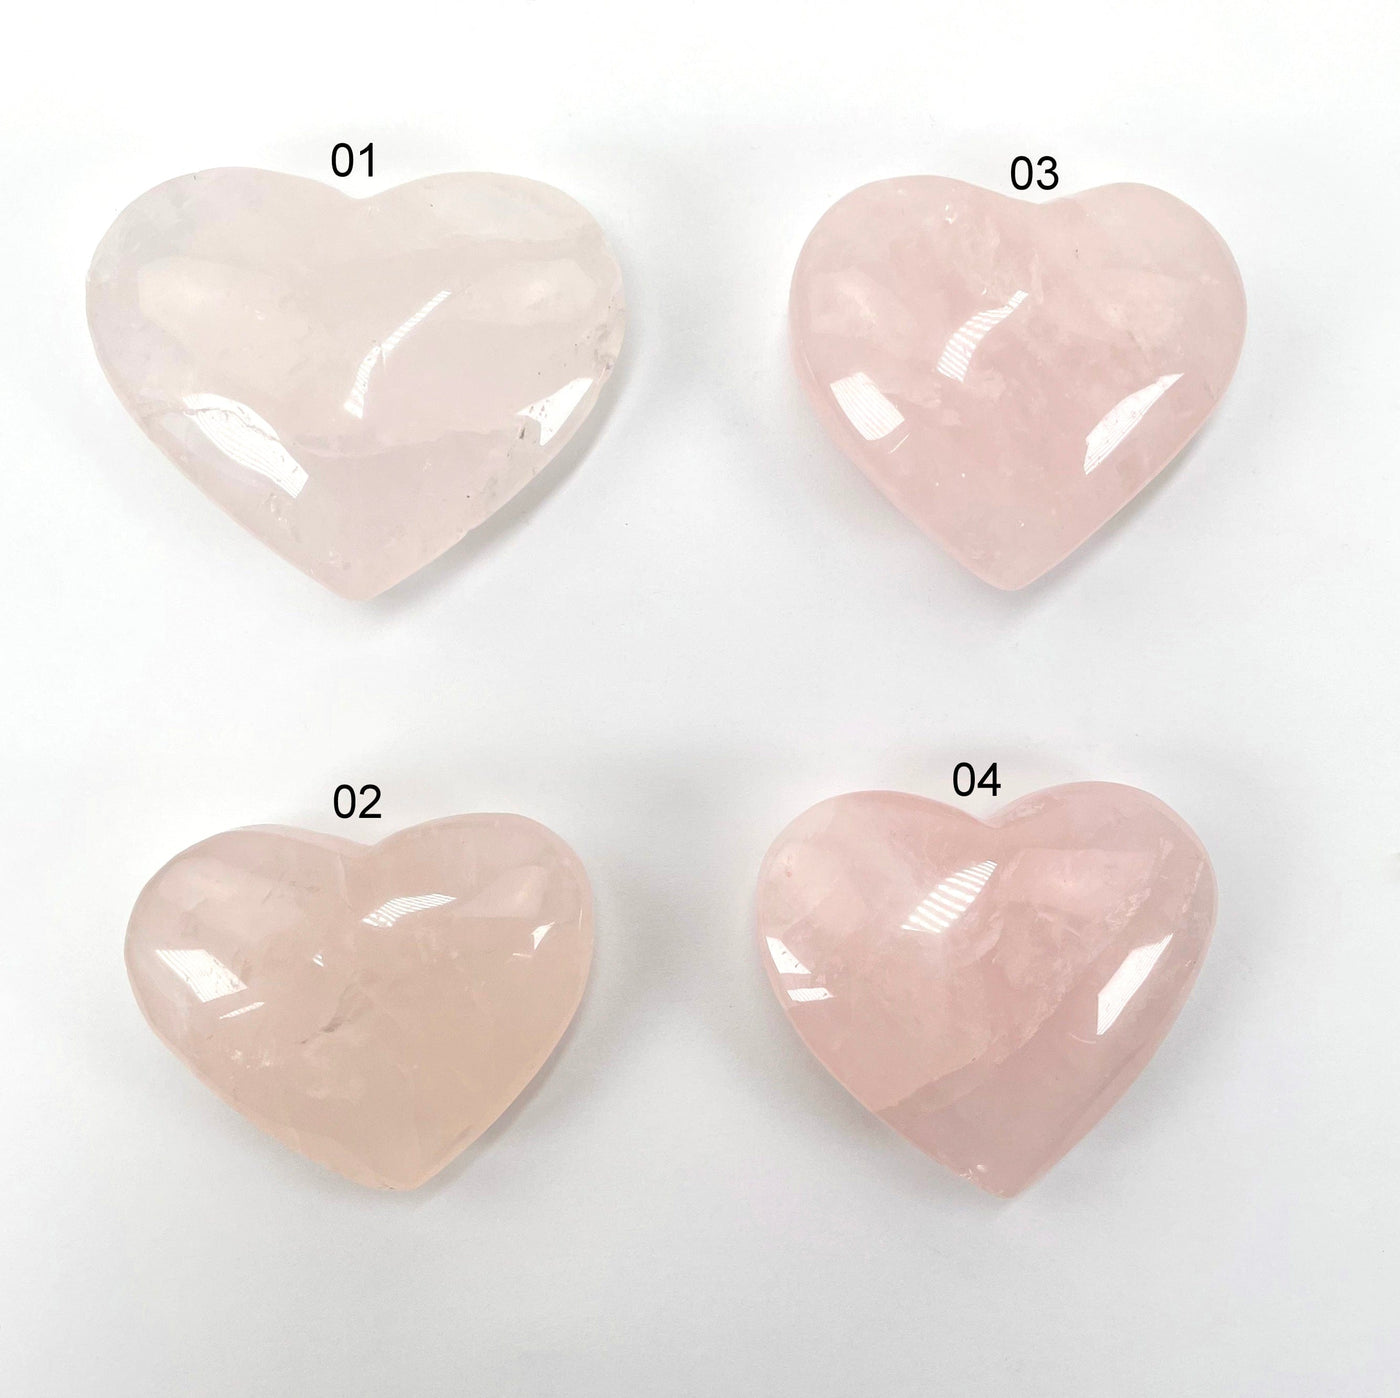 rose quartz polished hearts on display